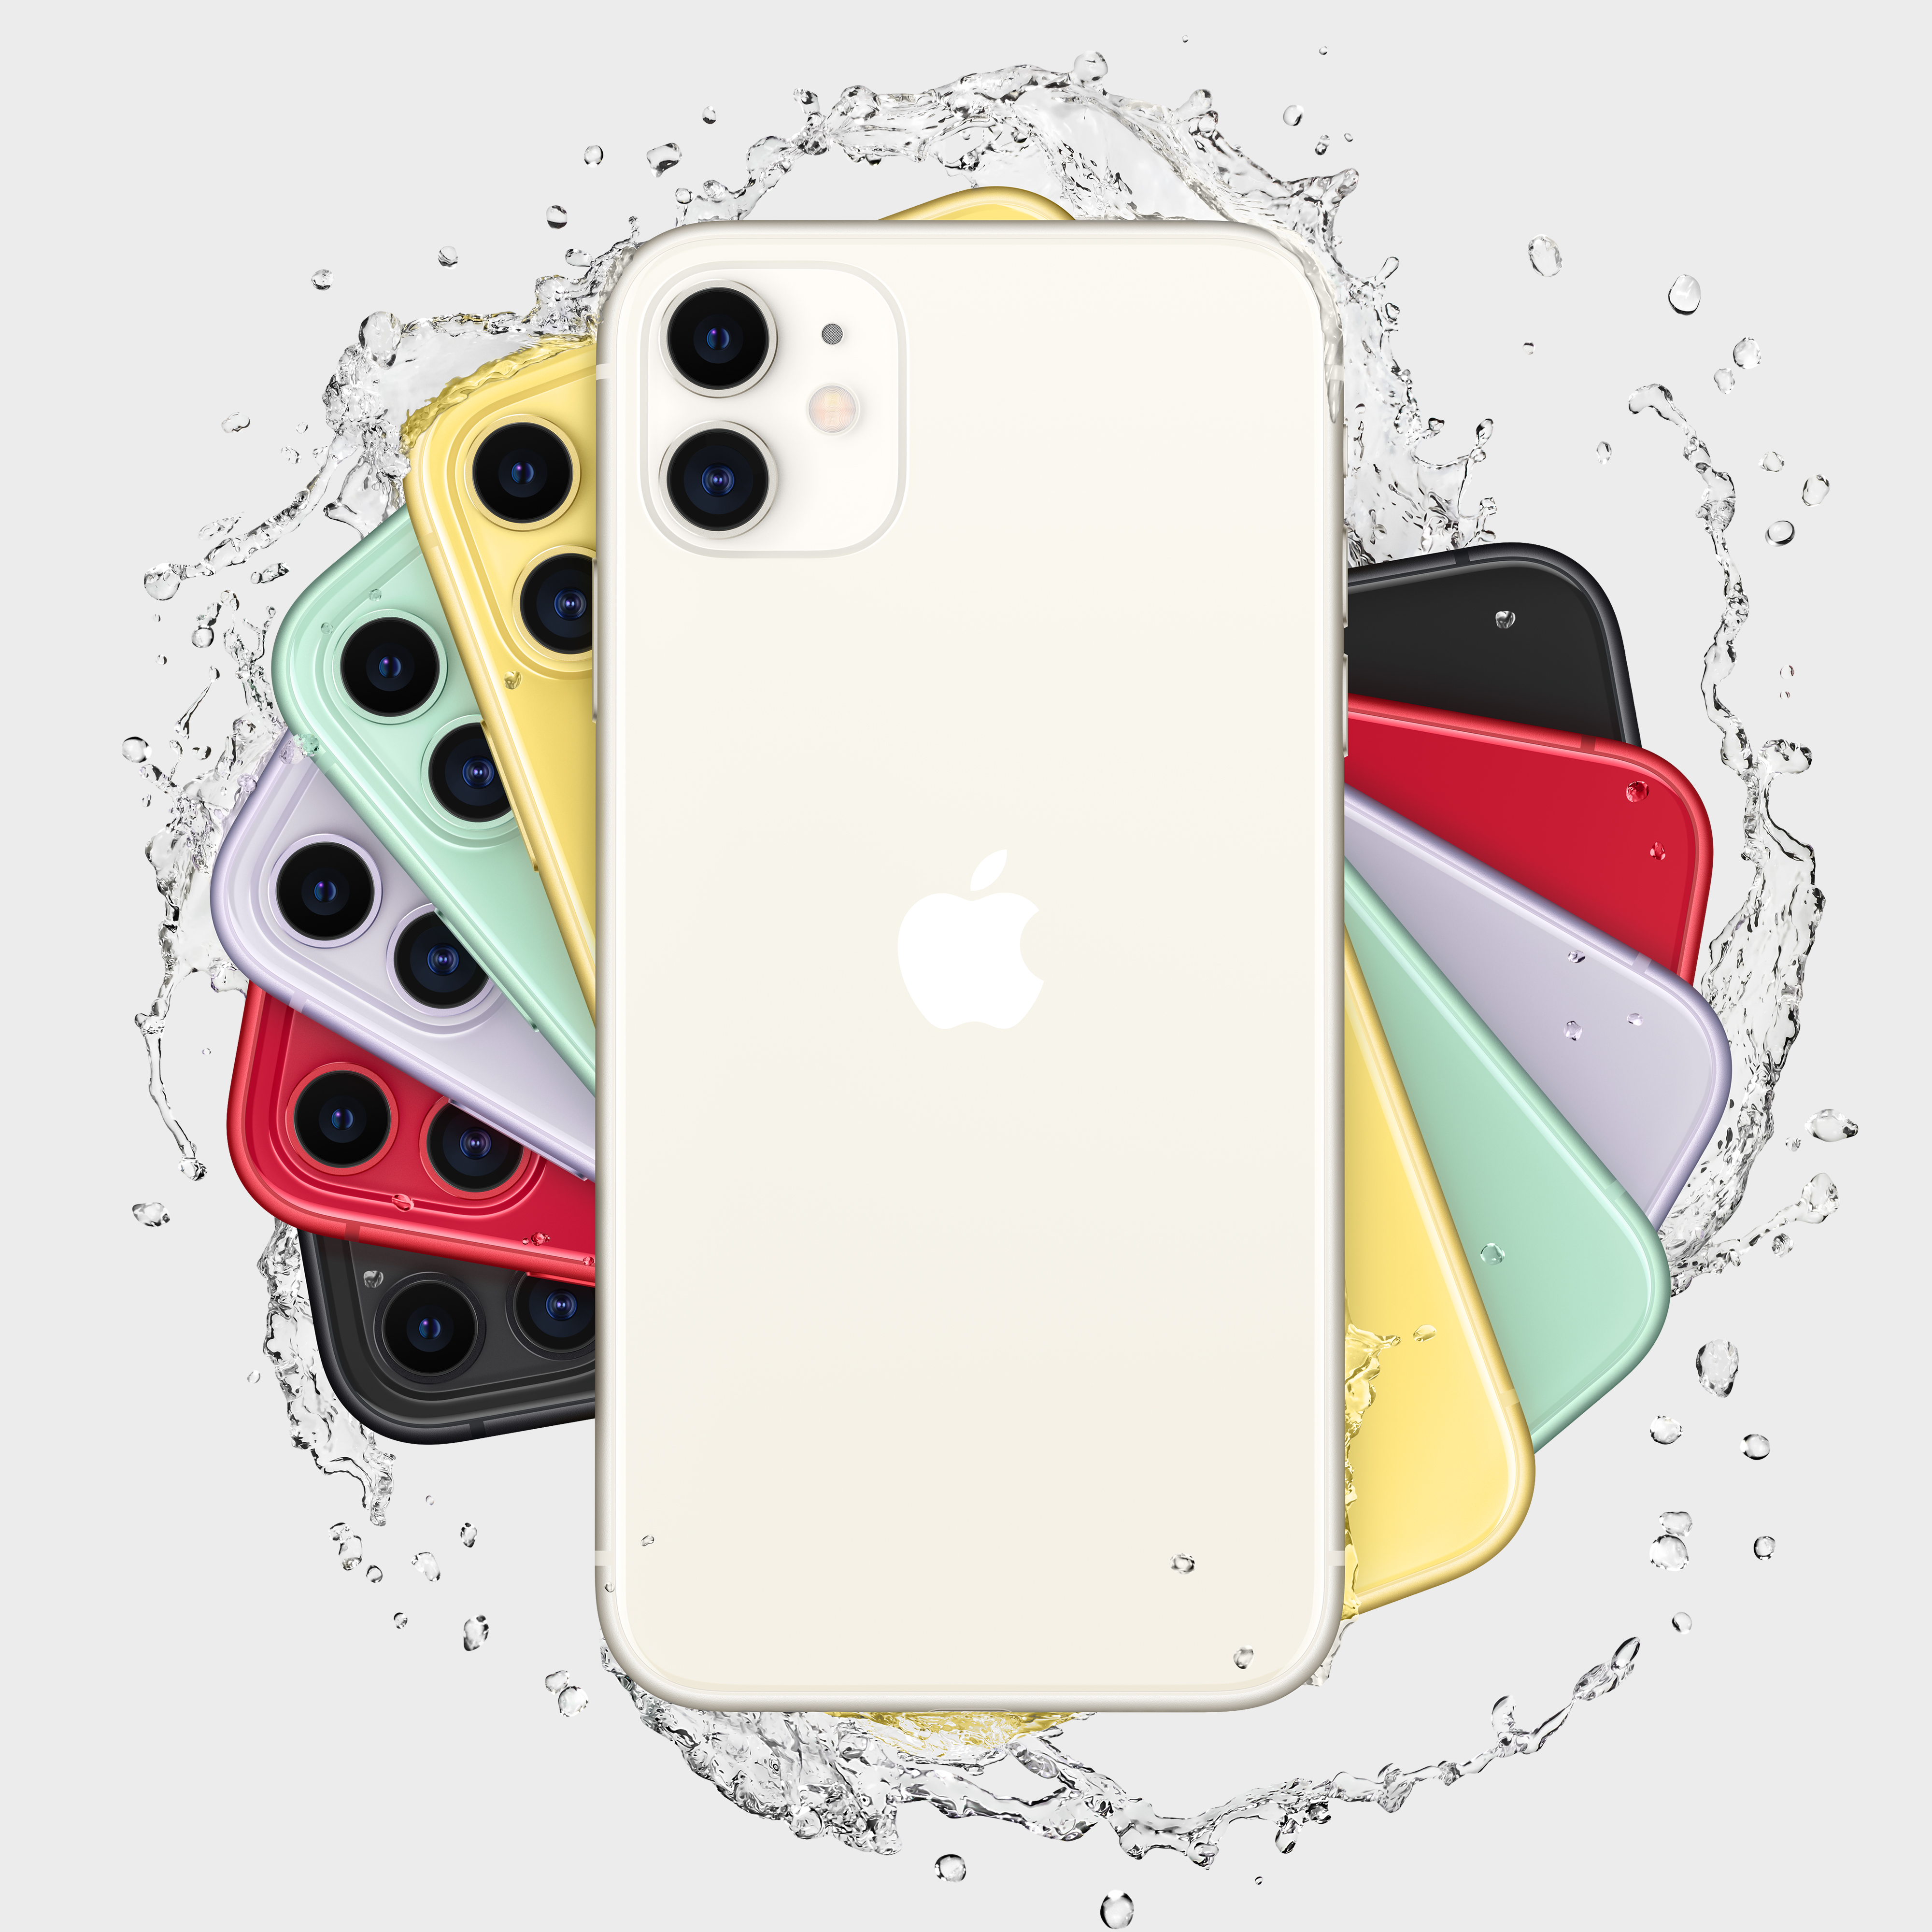 Фото — Apple iPhone 11, 64 ГБ, белый, новая комплектация